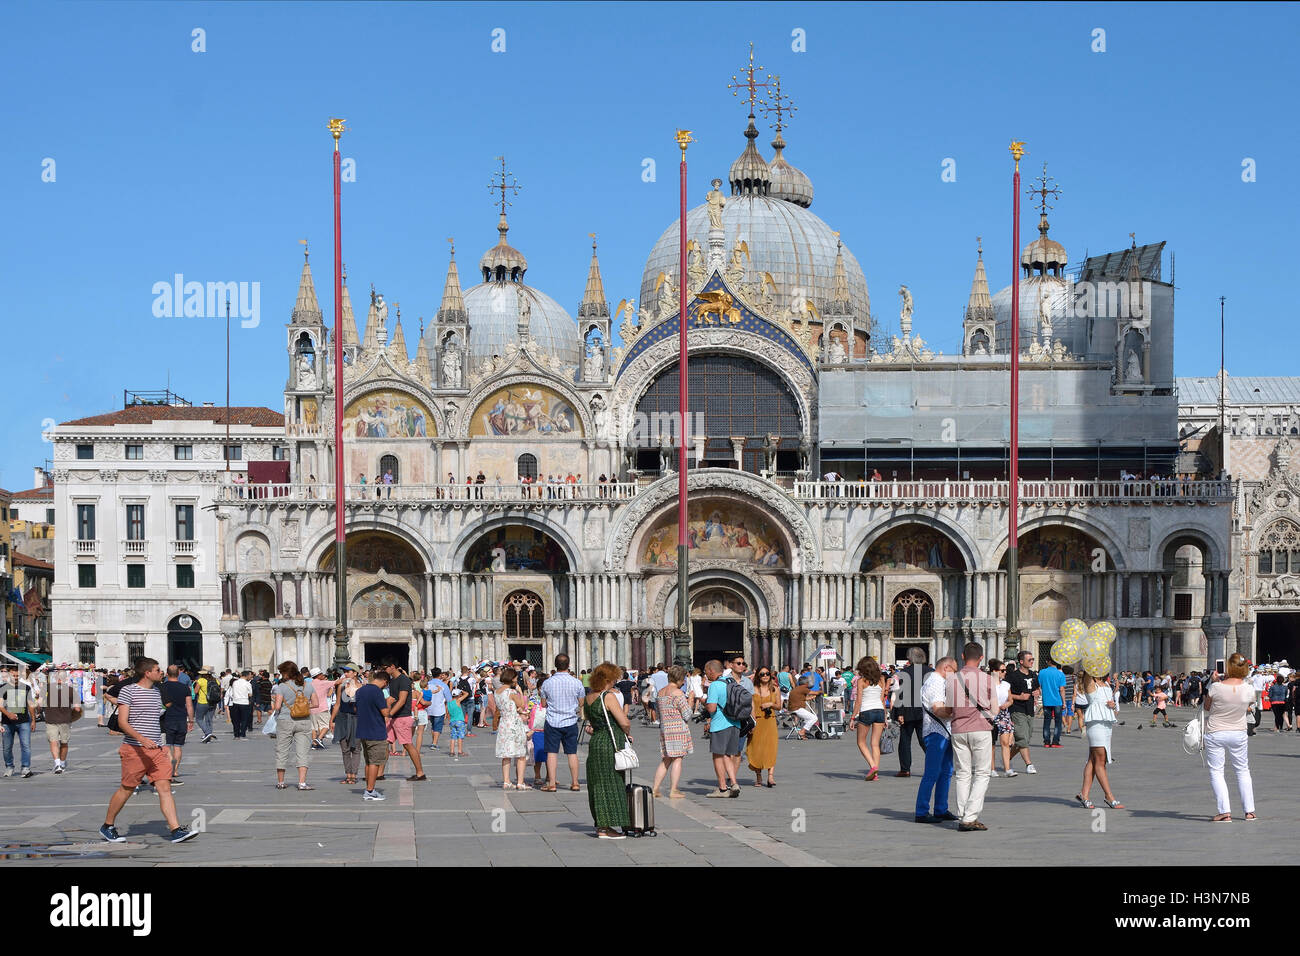 St. Mark's Basilica of Venice in Italy. Stock Photo